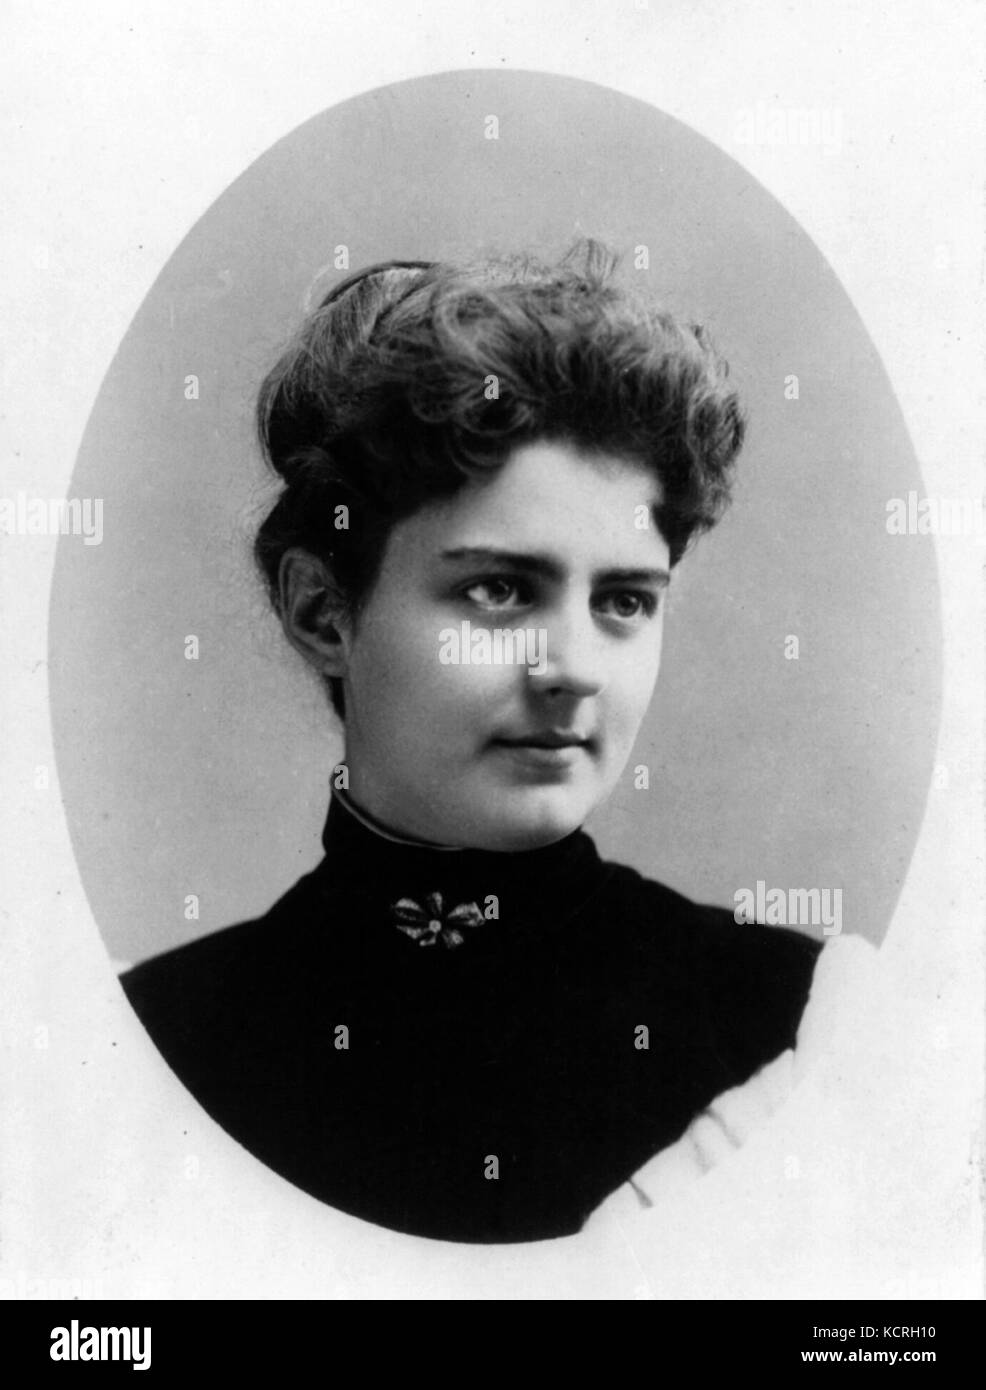 Frances Folsom Cleveland cph.3b19105 Stock Photo - Alamy